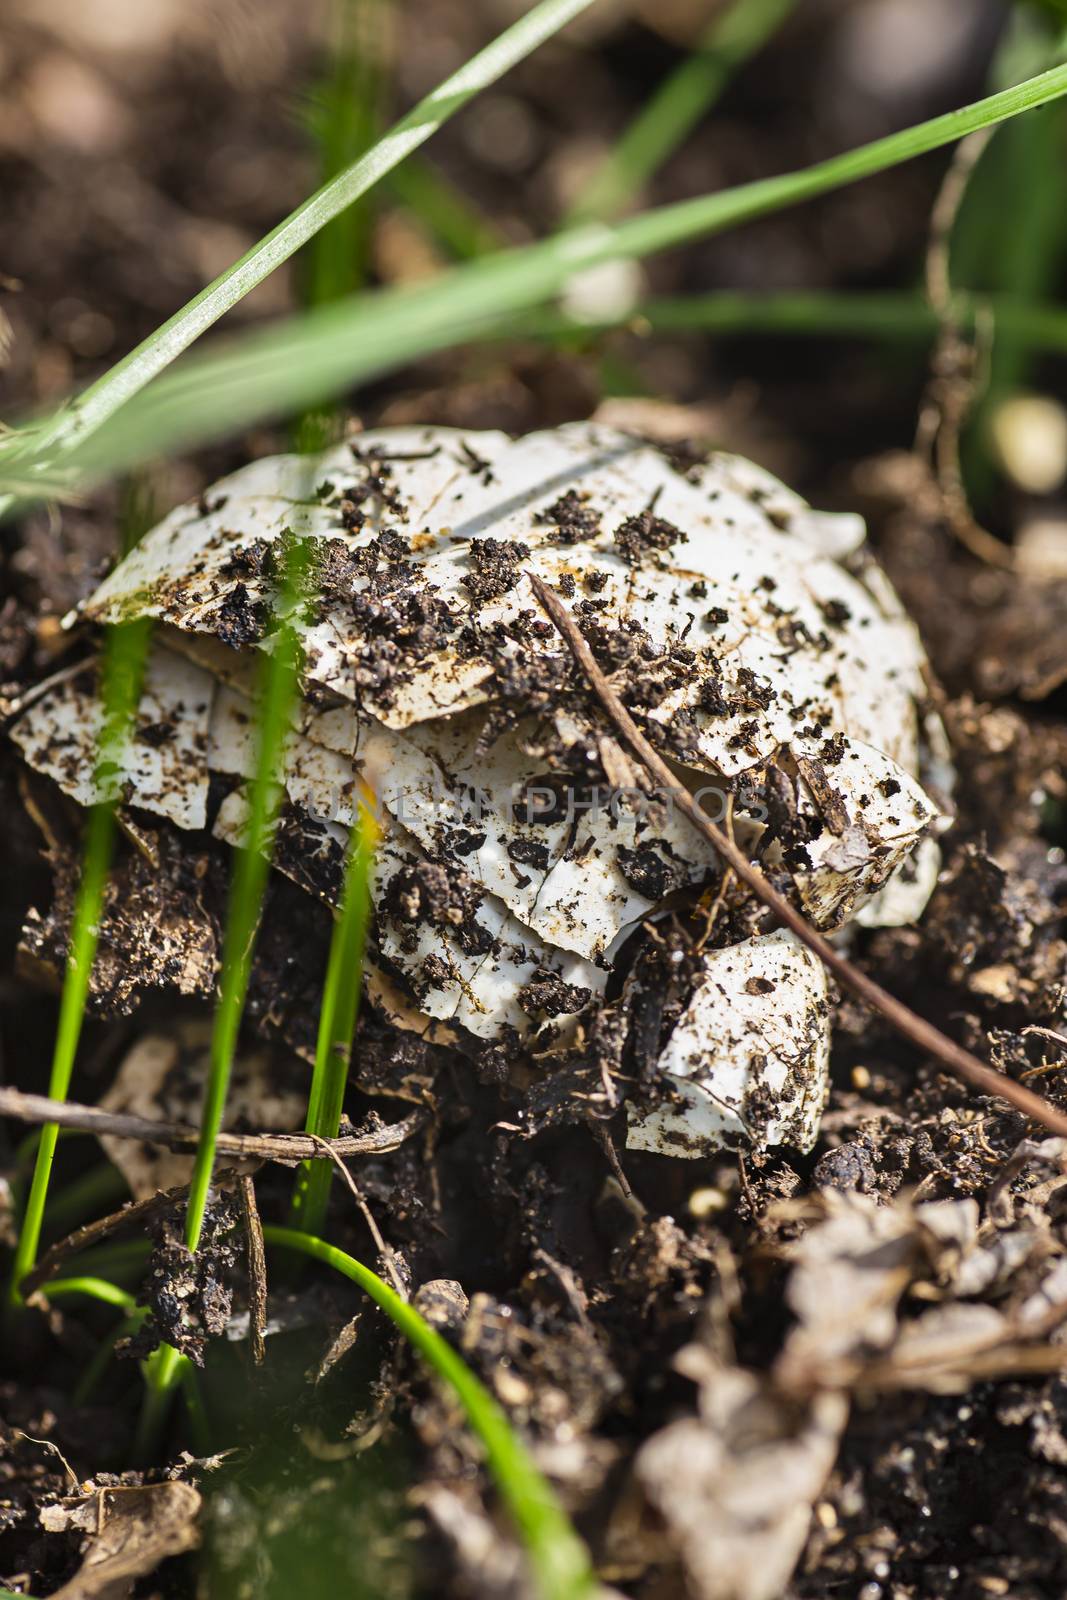 broken chicken egg shell decomposing in the earth